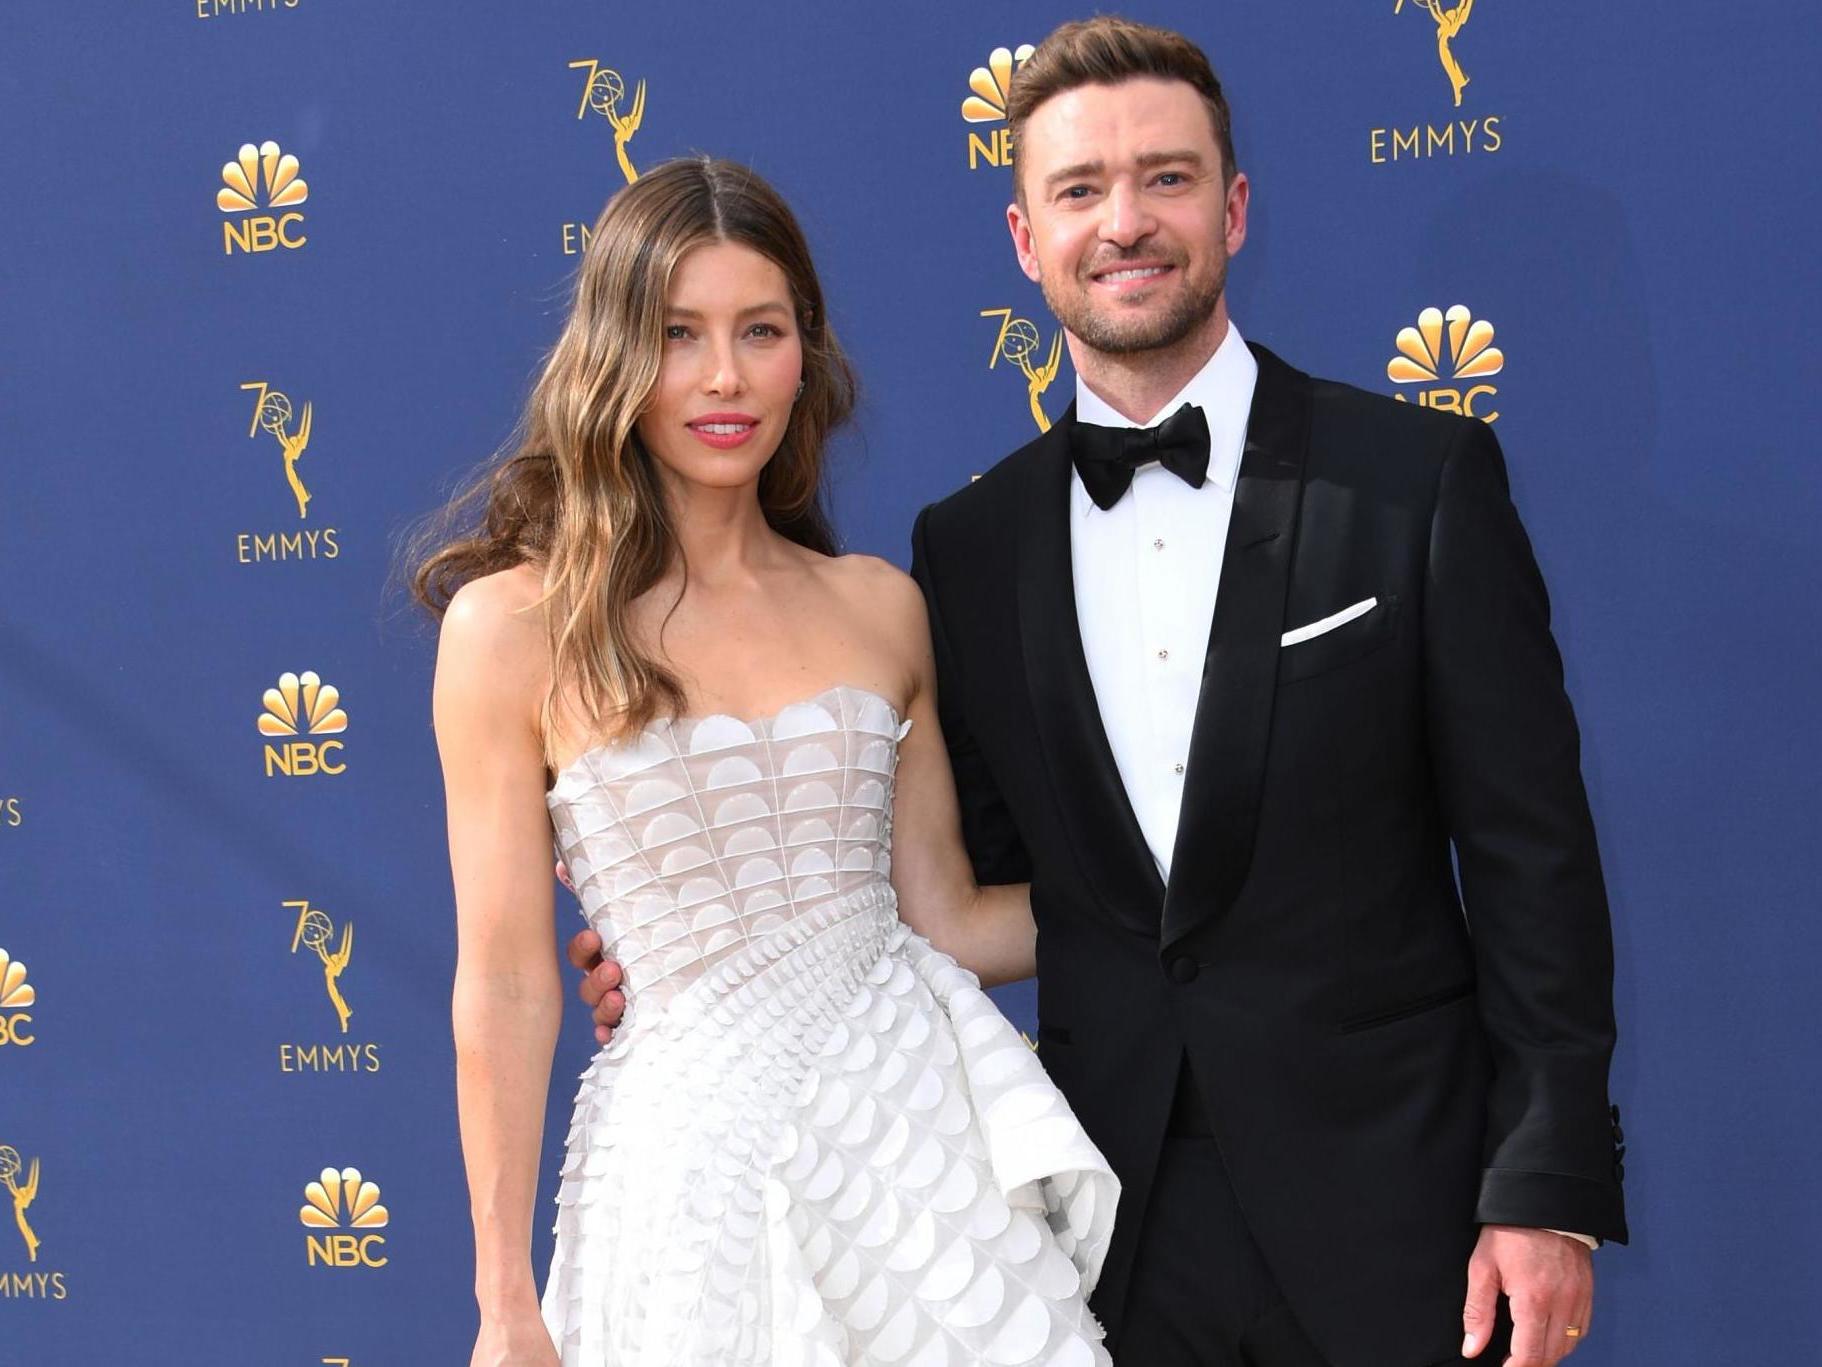 (L-R) Jessica Biel and husband Justin Timberlake at the 2018 Emmy Awards